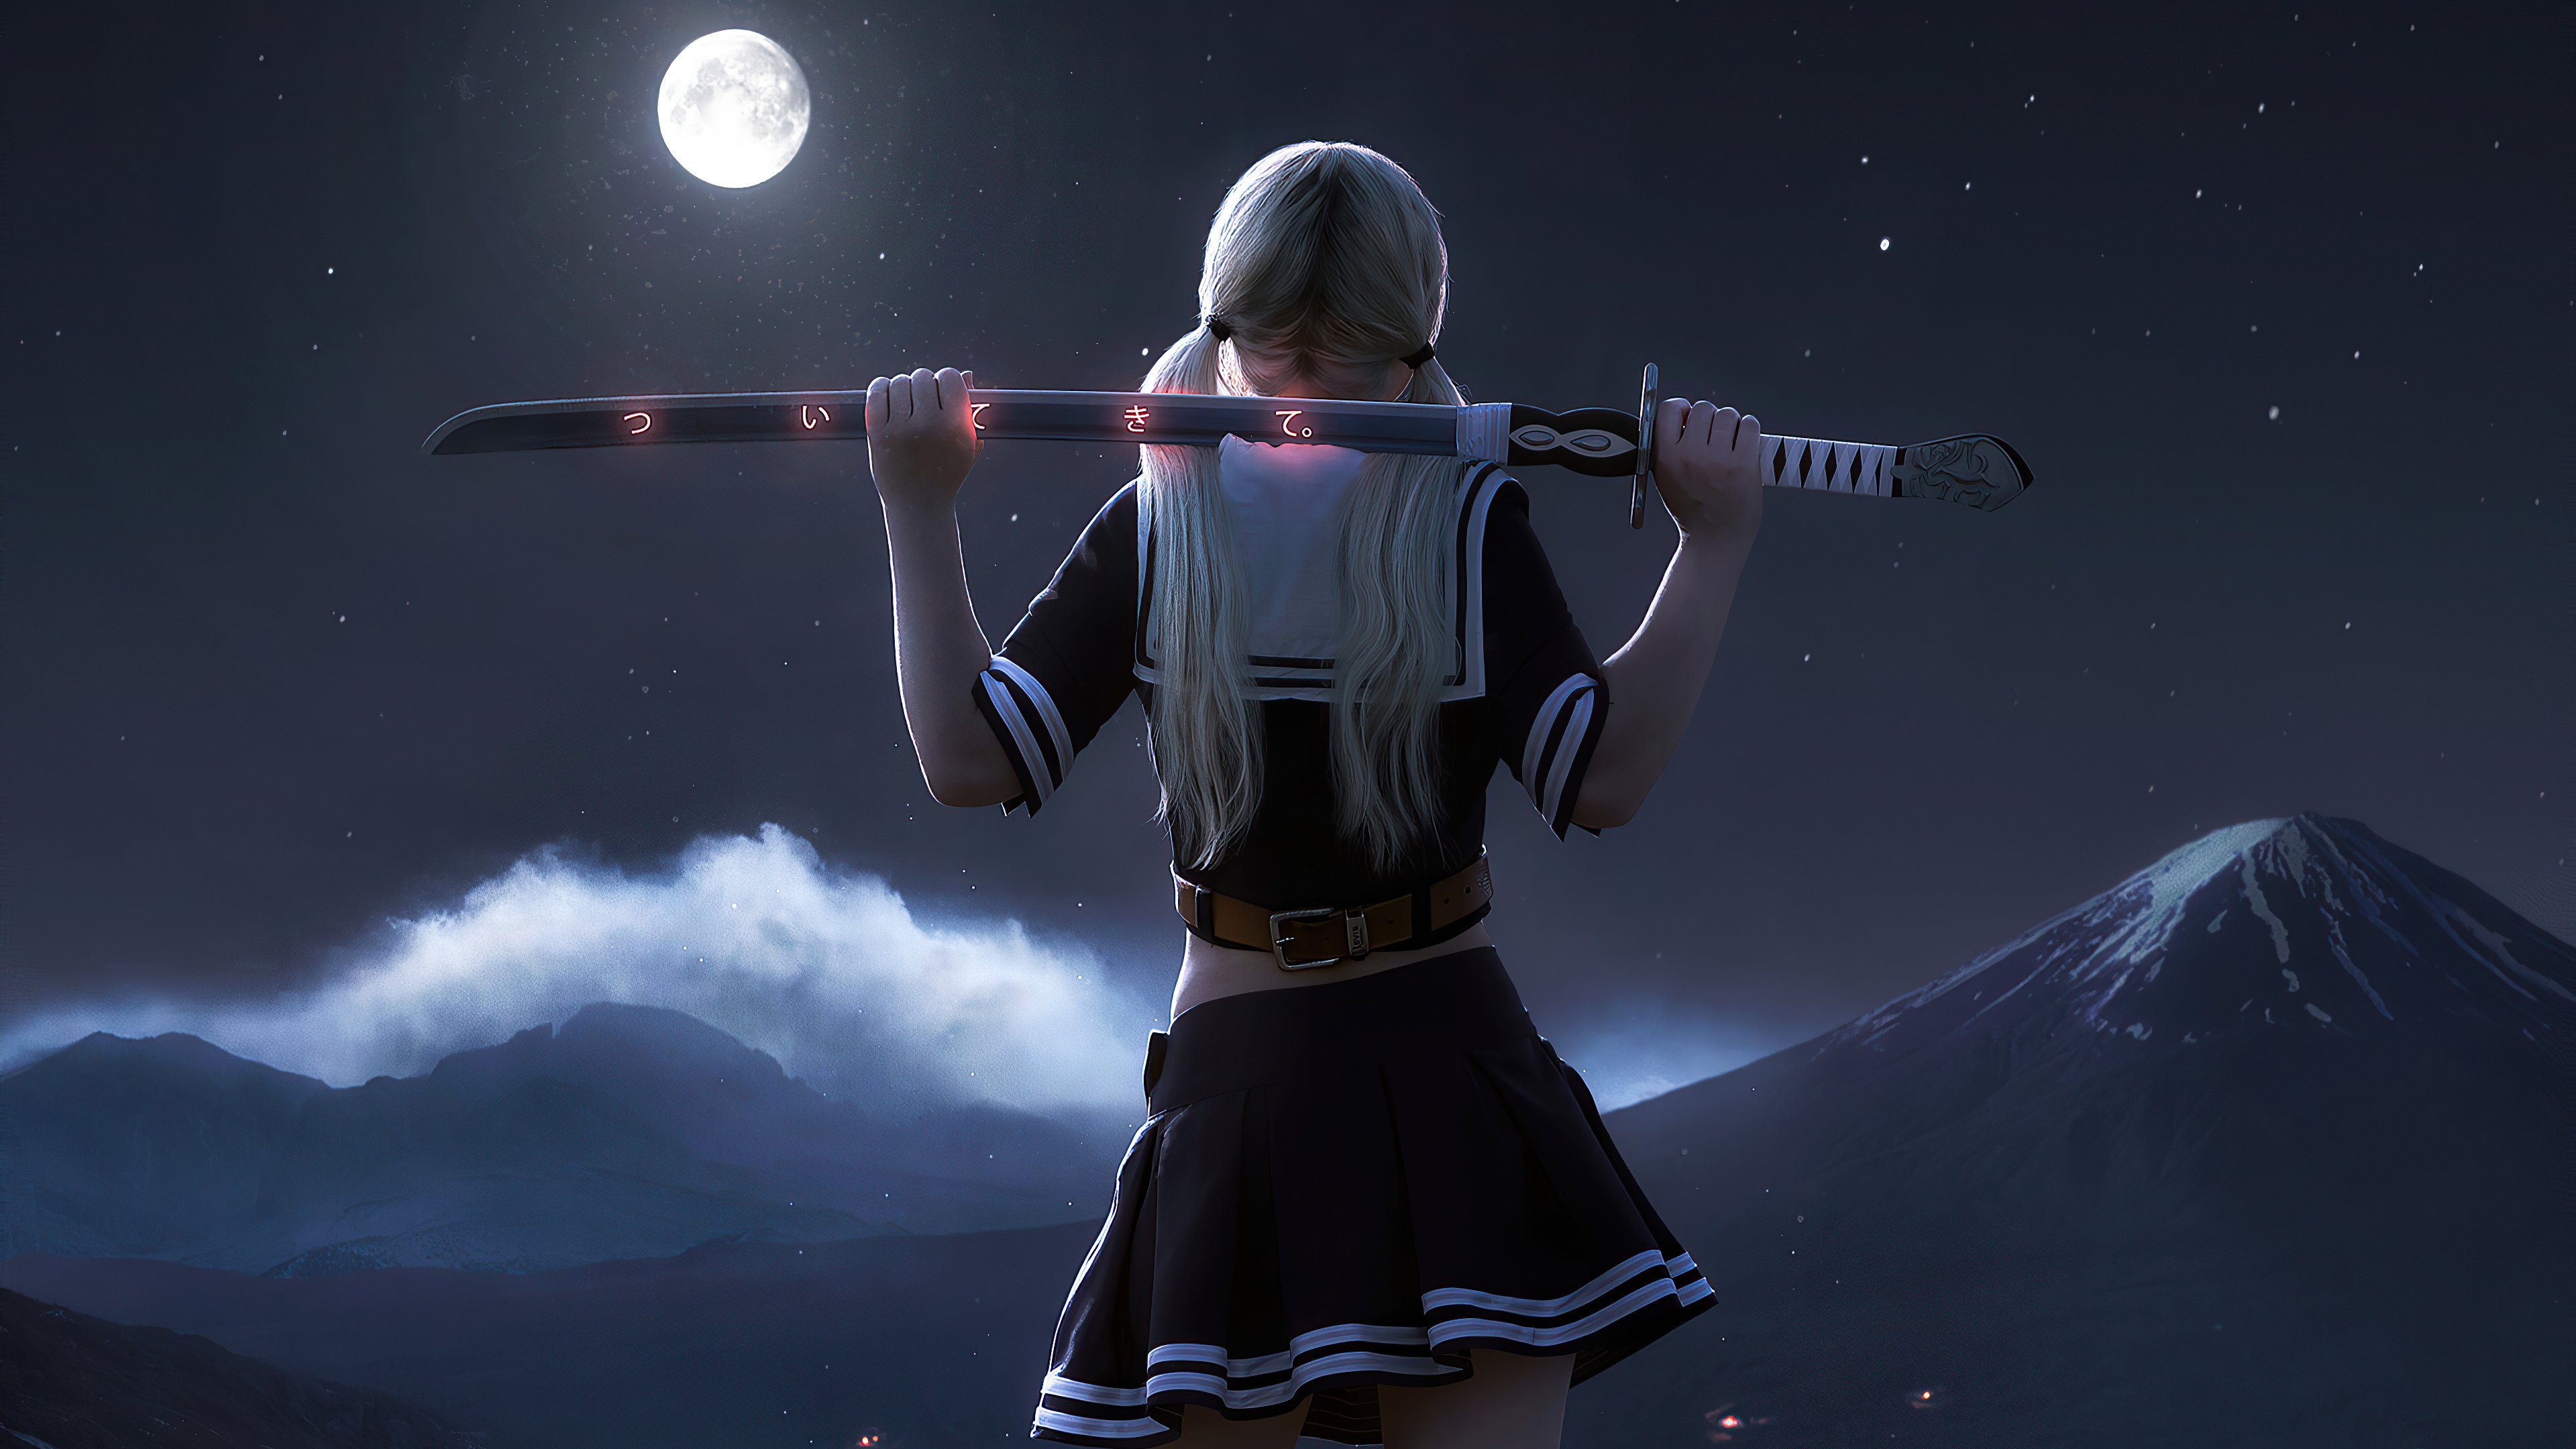 Samurai Sword Girl 4k, HD Artist, 4k Wallpaper, Image, Background, Photo and Picture